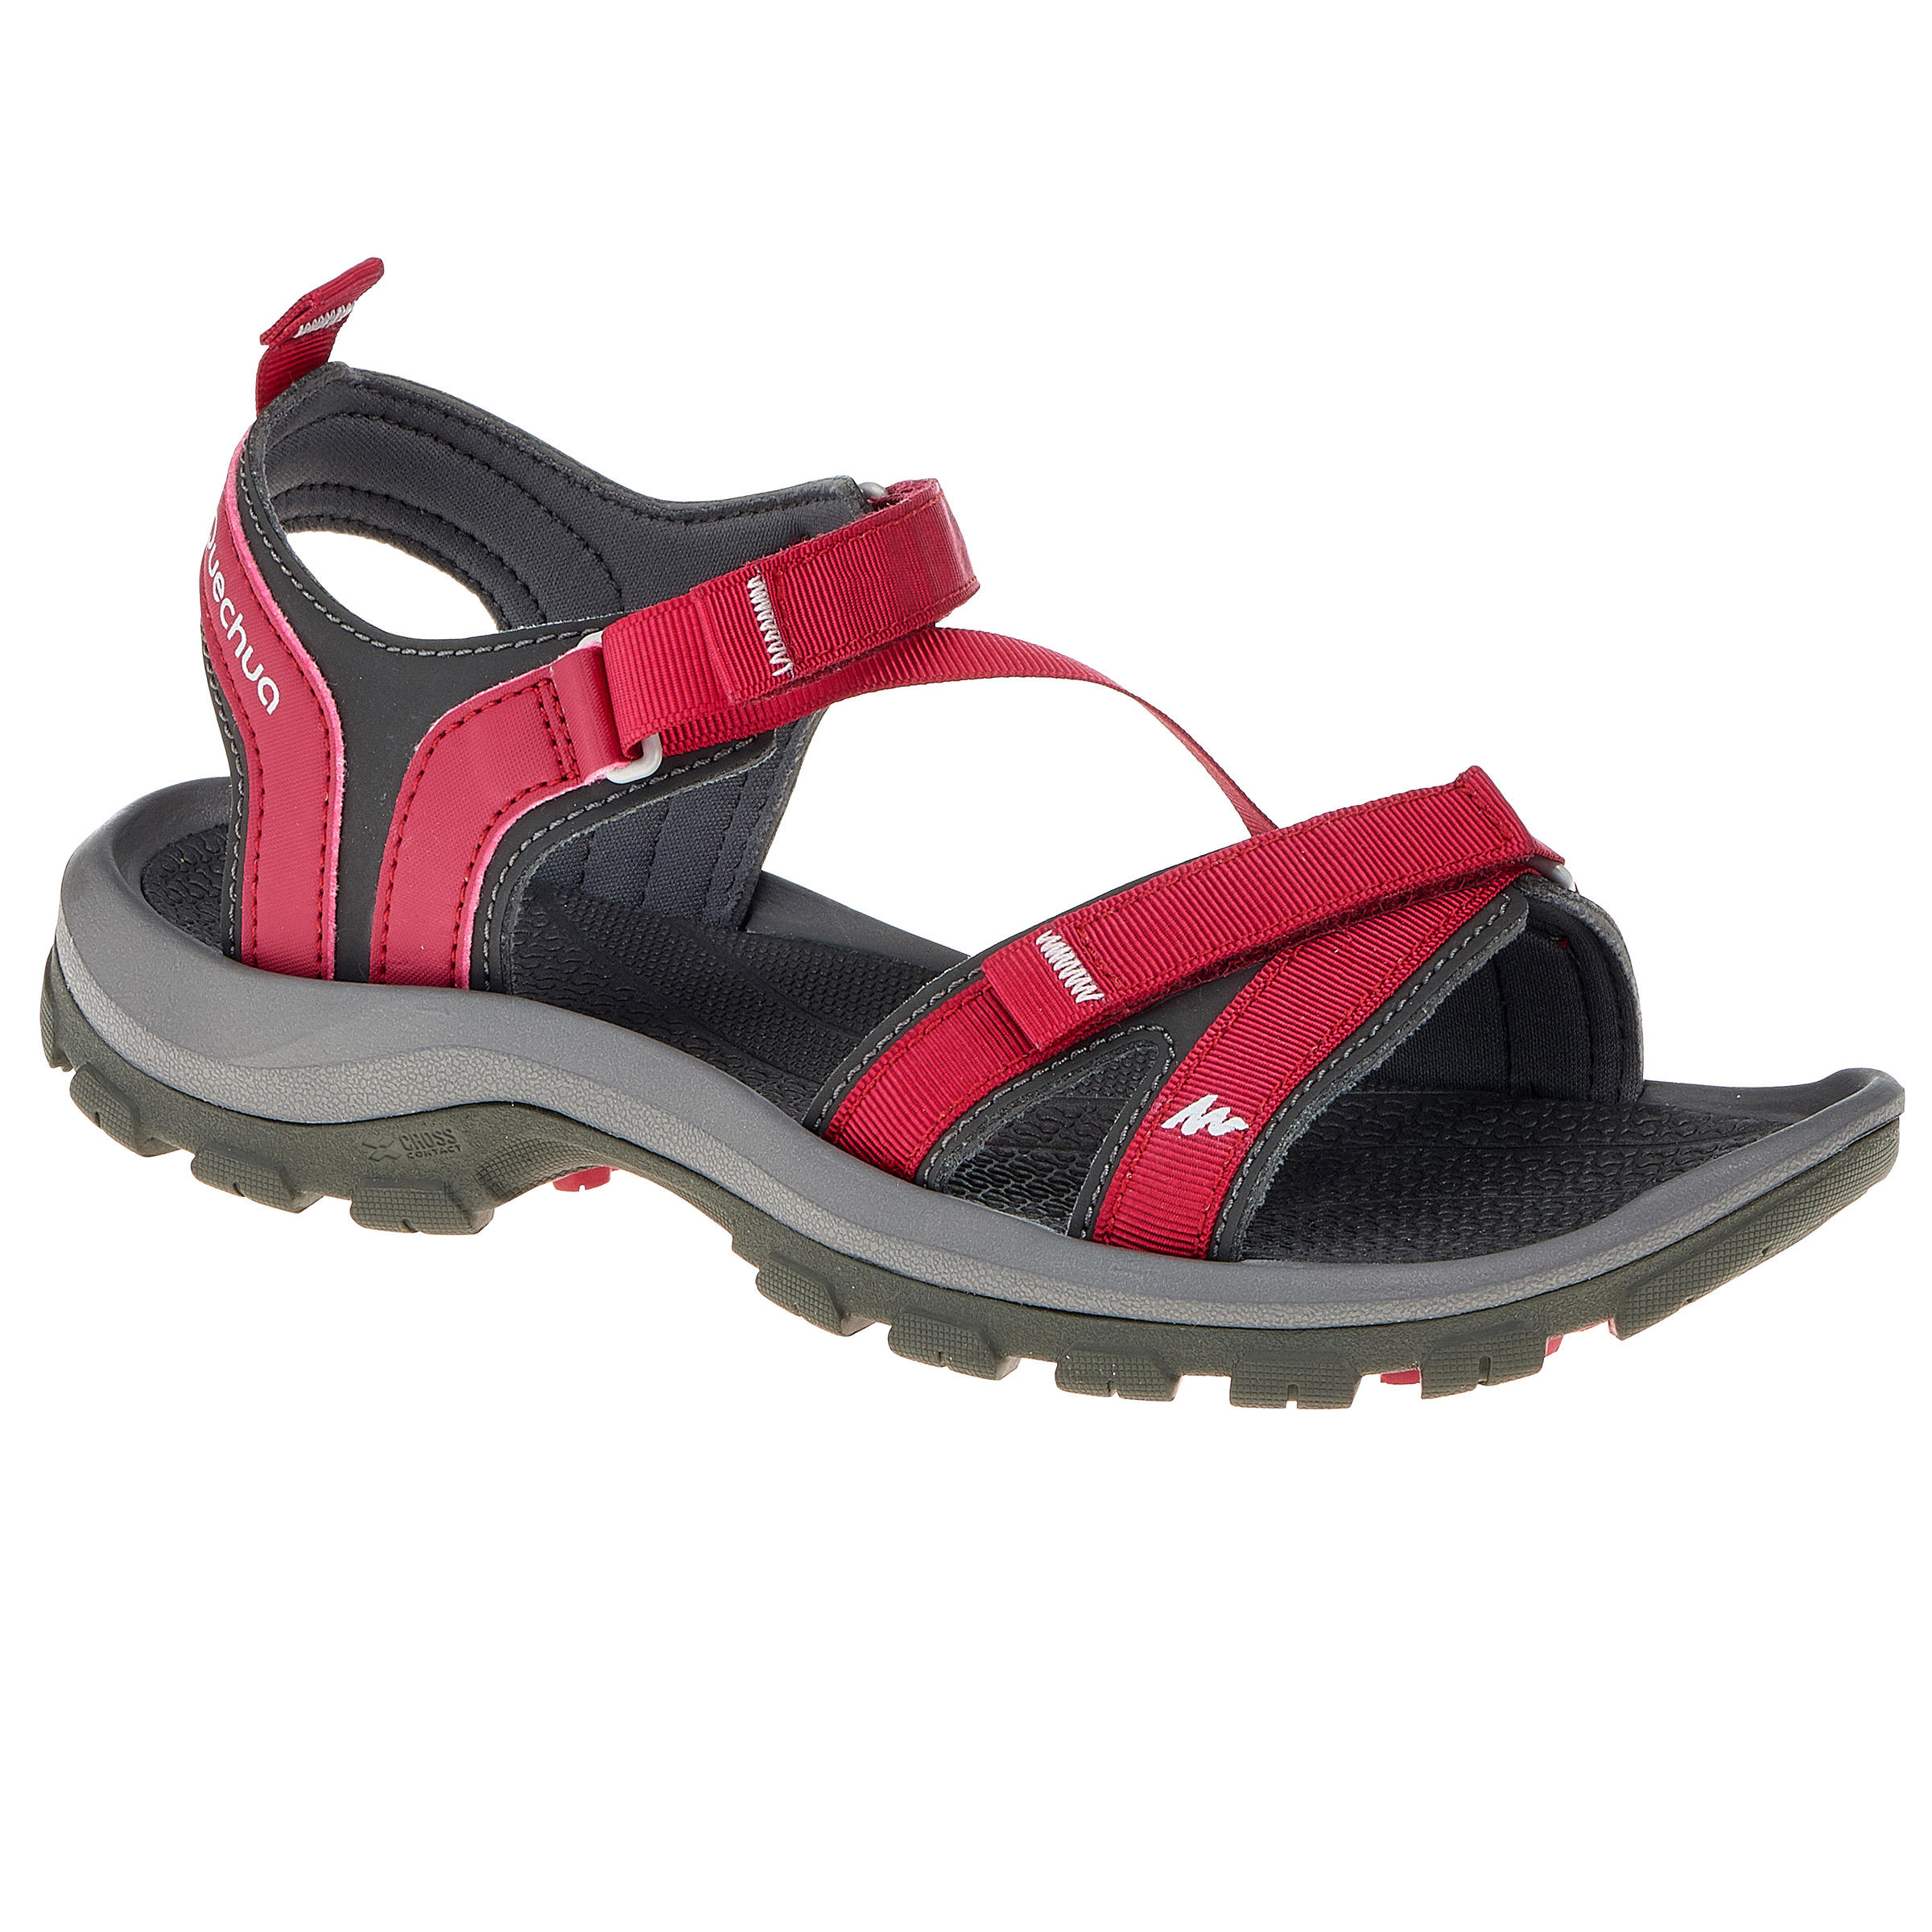 Women's Walking sandals - NH110 - Decathlon